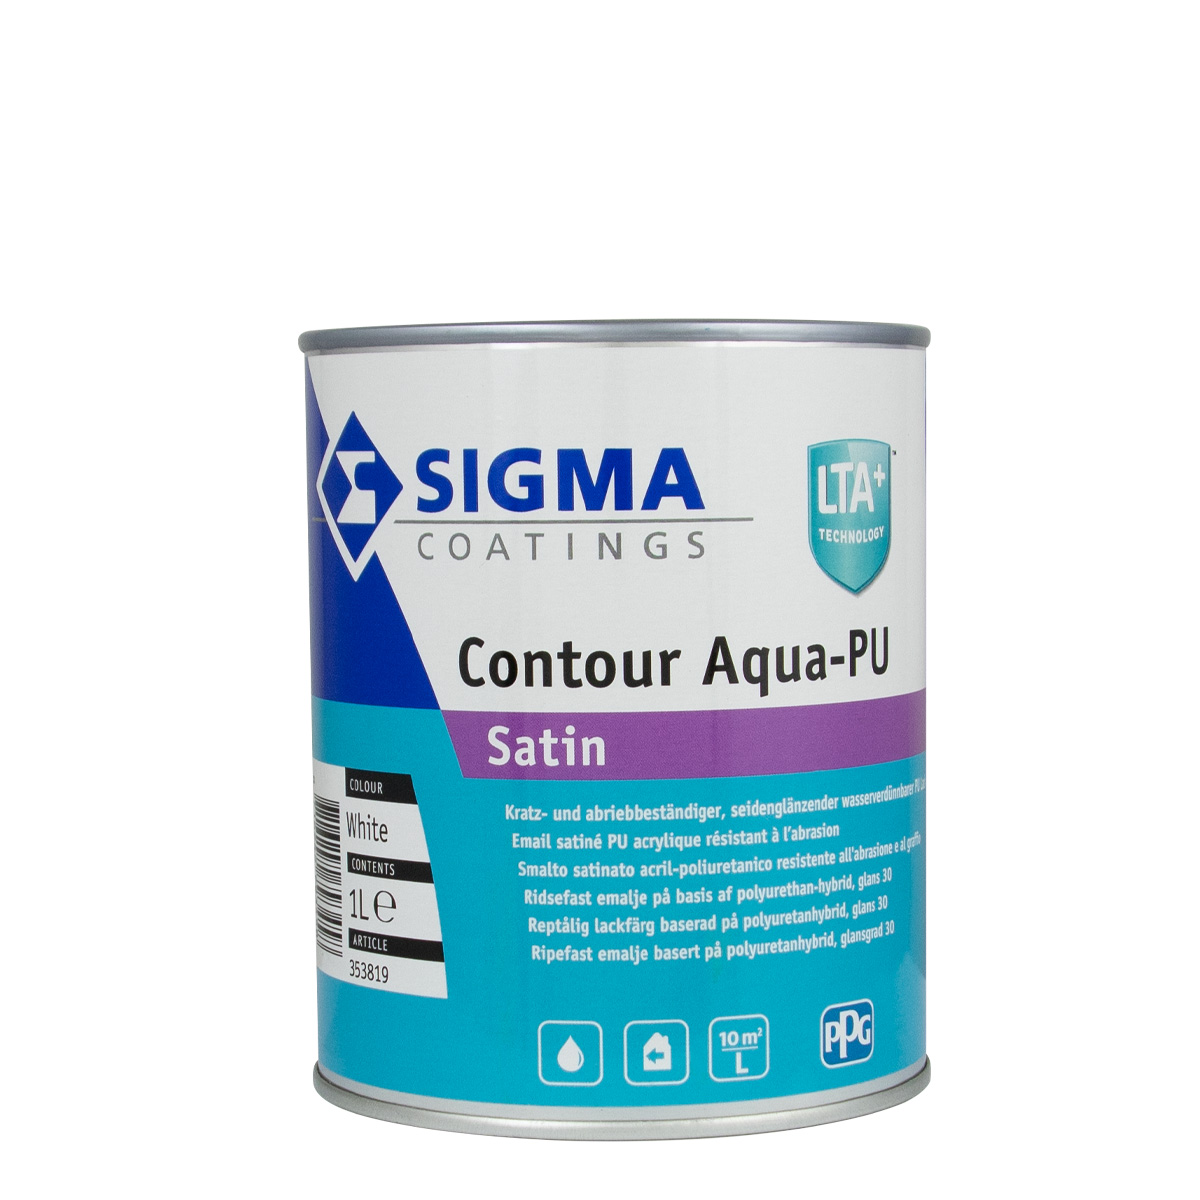 Sigma_Contour_Aqua_PU_Satin_1l_gross